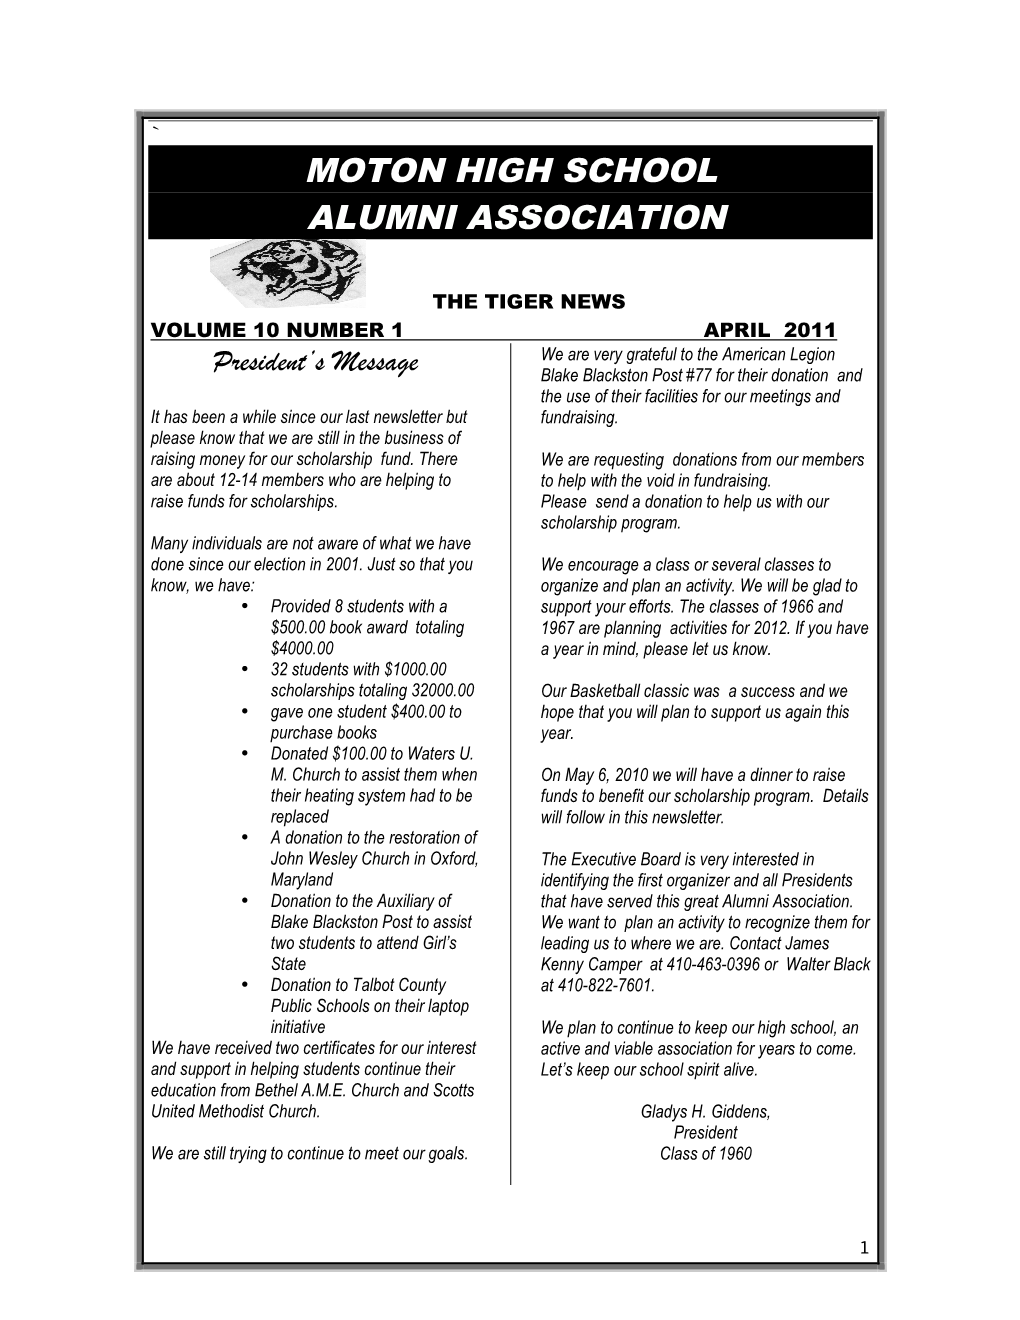 Moton High School Alumni Association